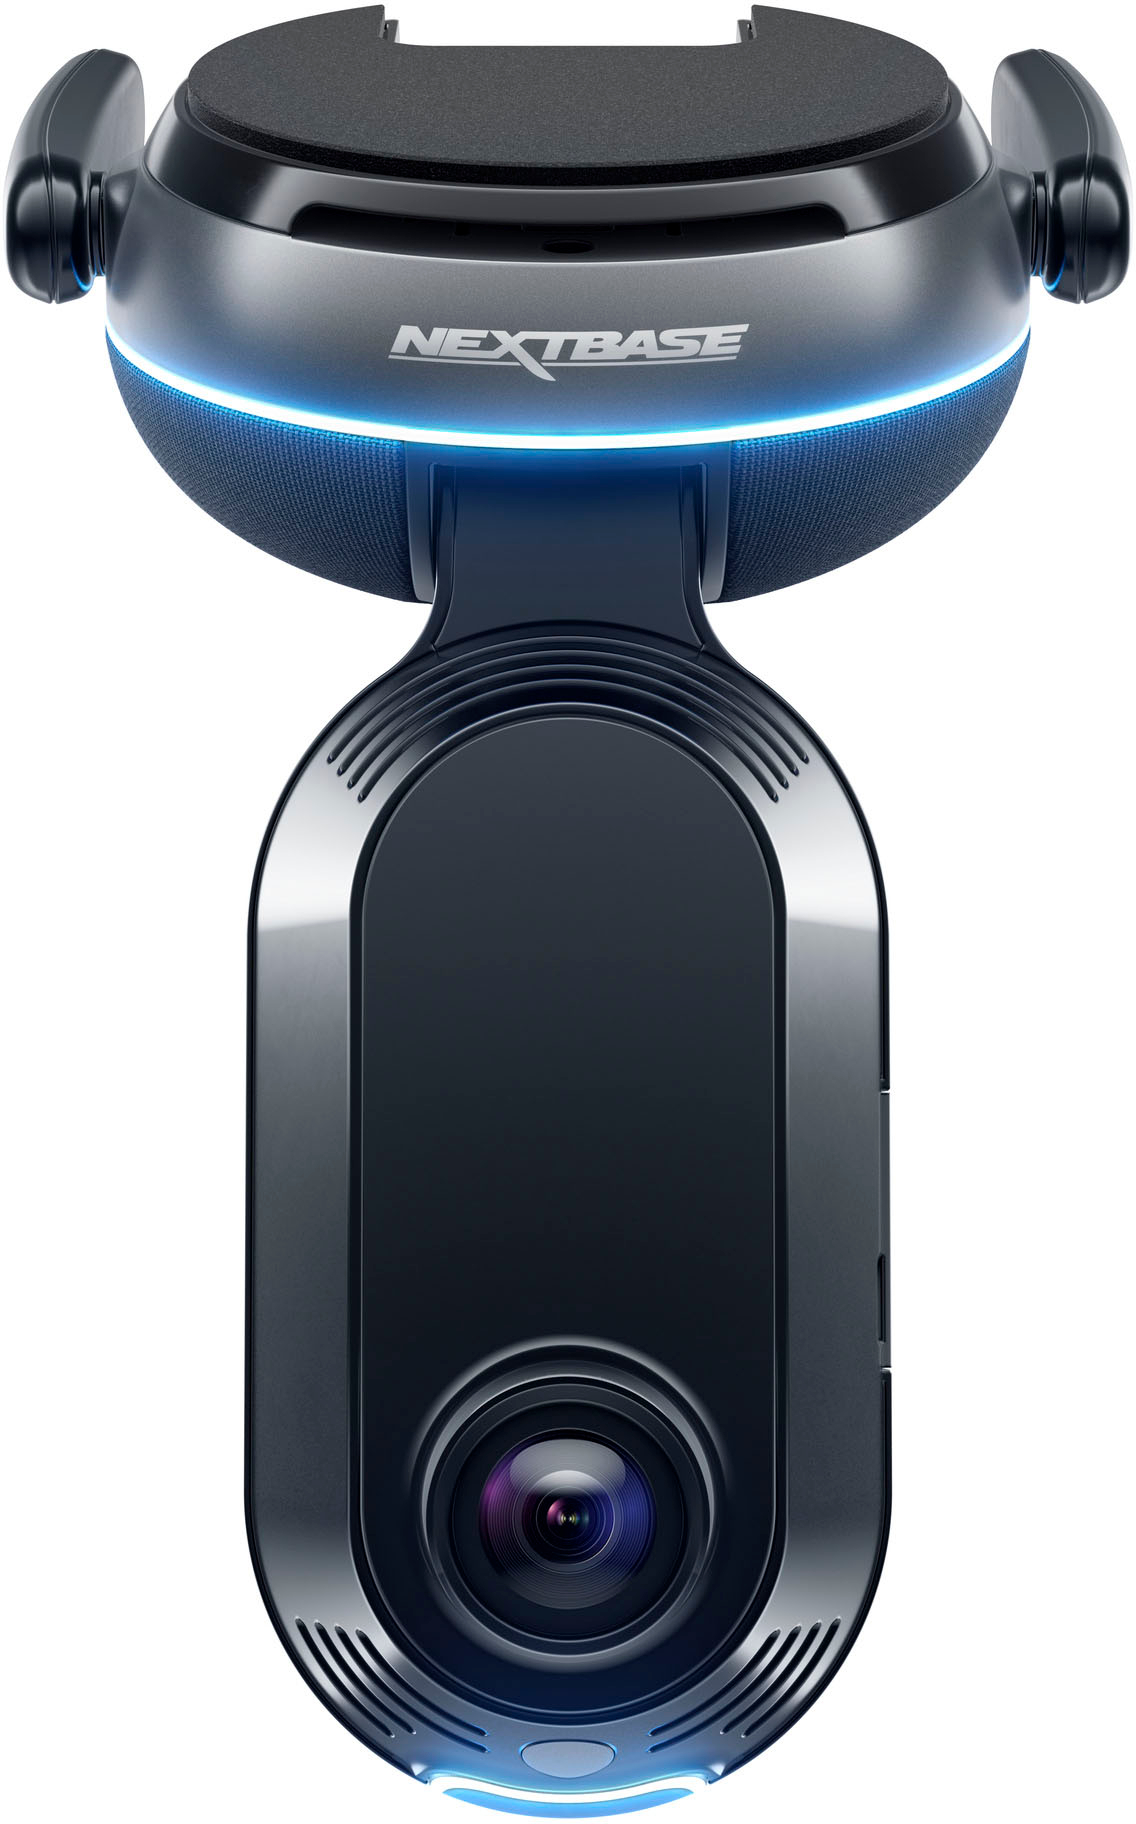 Nexar One dash cam system - electronics - by owner - sale - craigslist